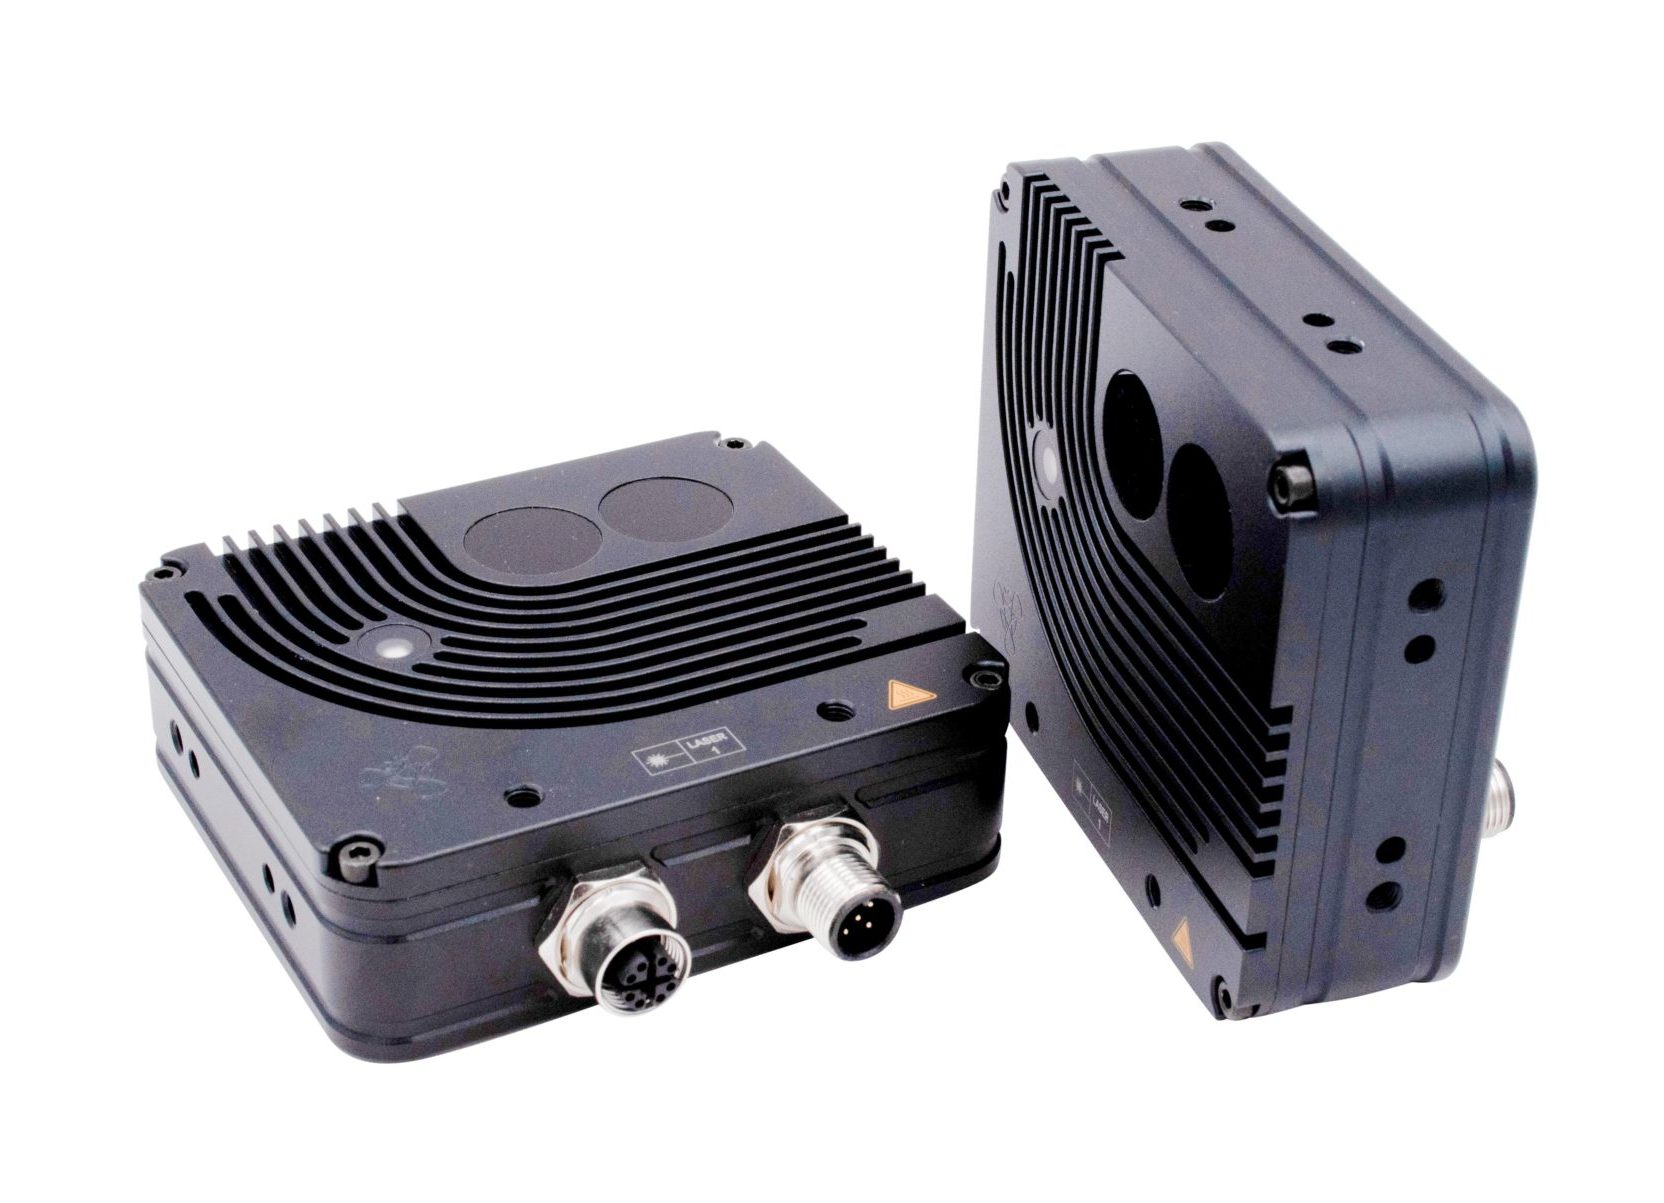 Terabee Blog 3Dcam VGA, bringing performance, affordability and versatility to industrial 3D depth sensing